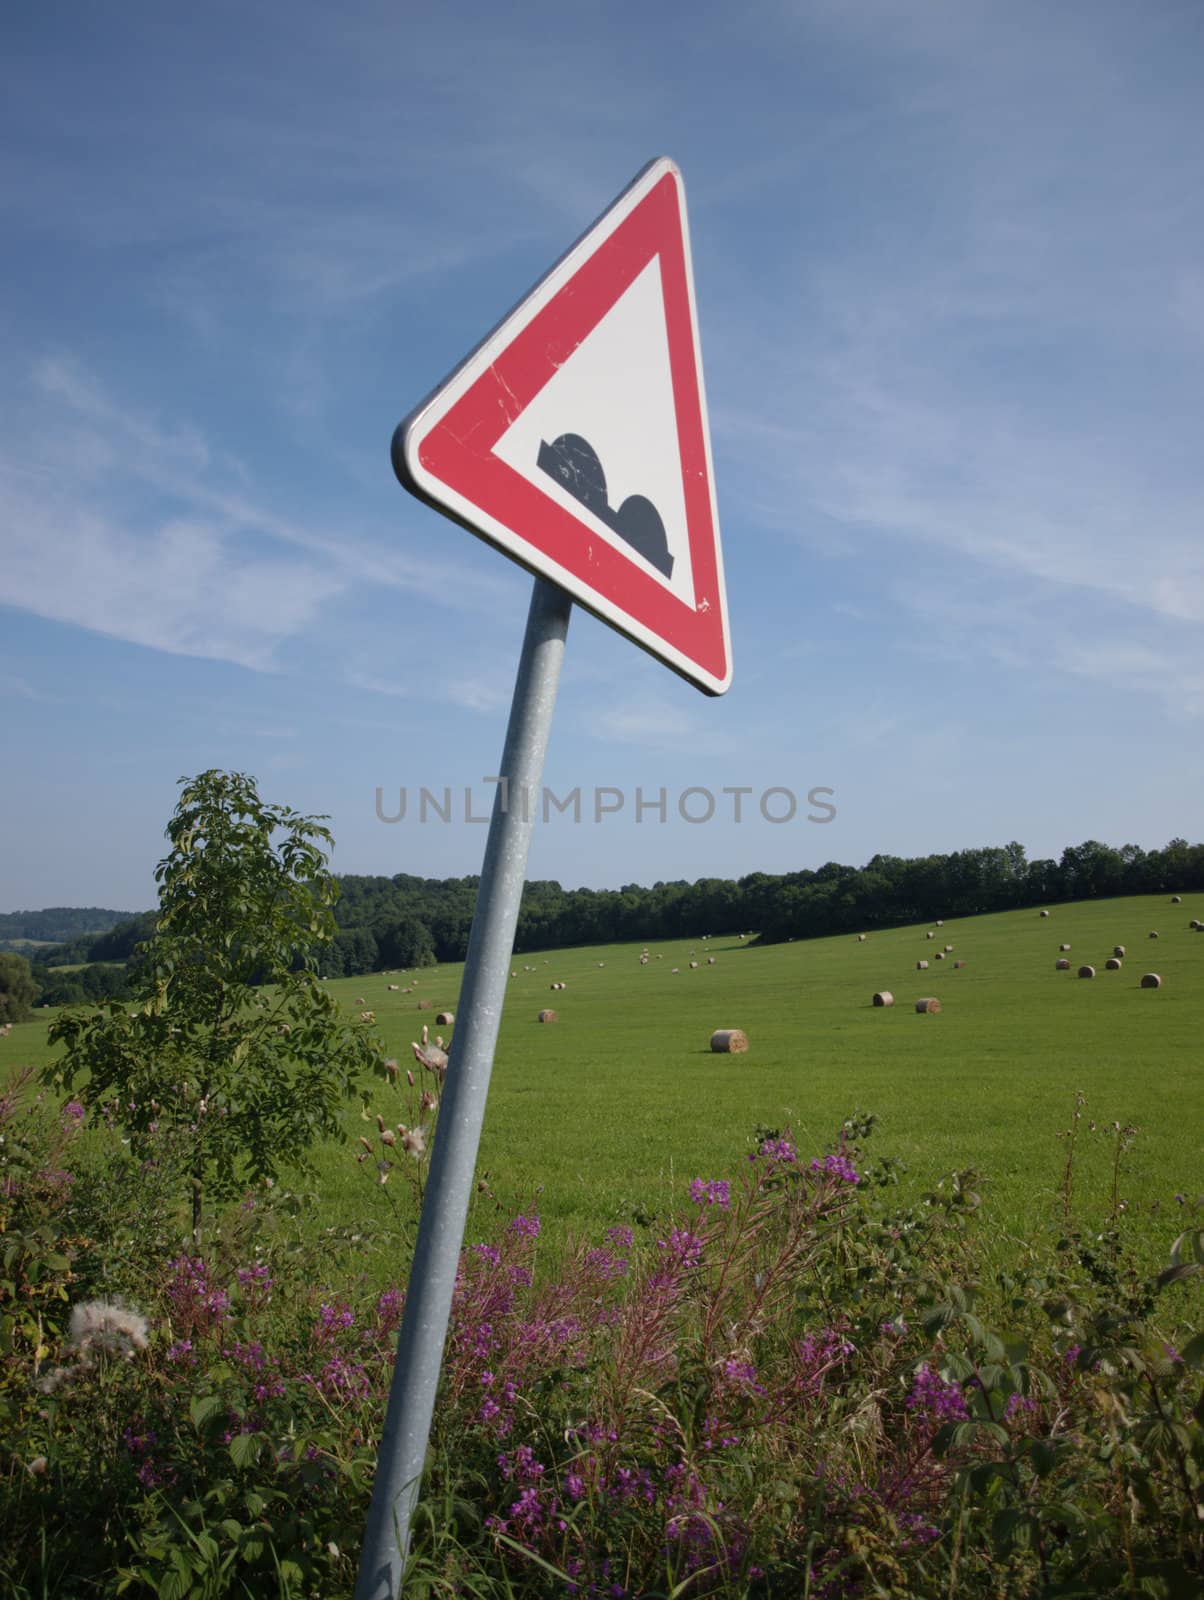 the traffic sign against summer landscape
